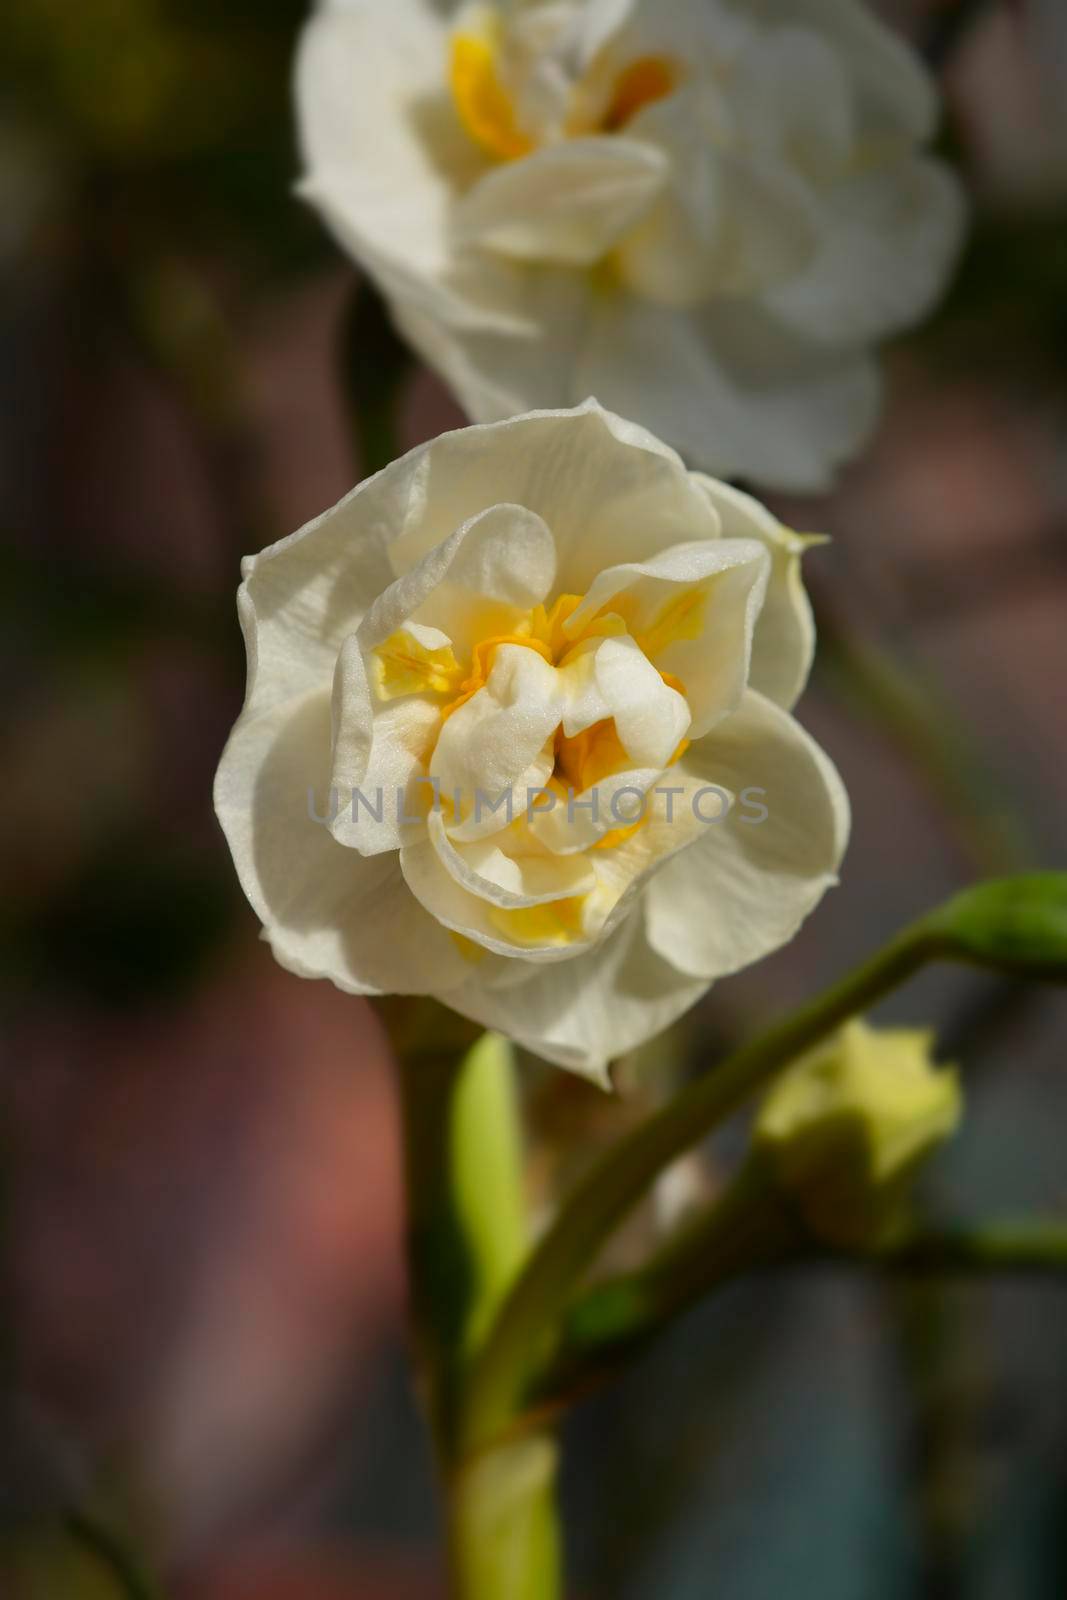 Daffodil Cheerfulness by nahhan